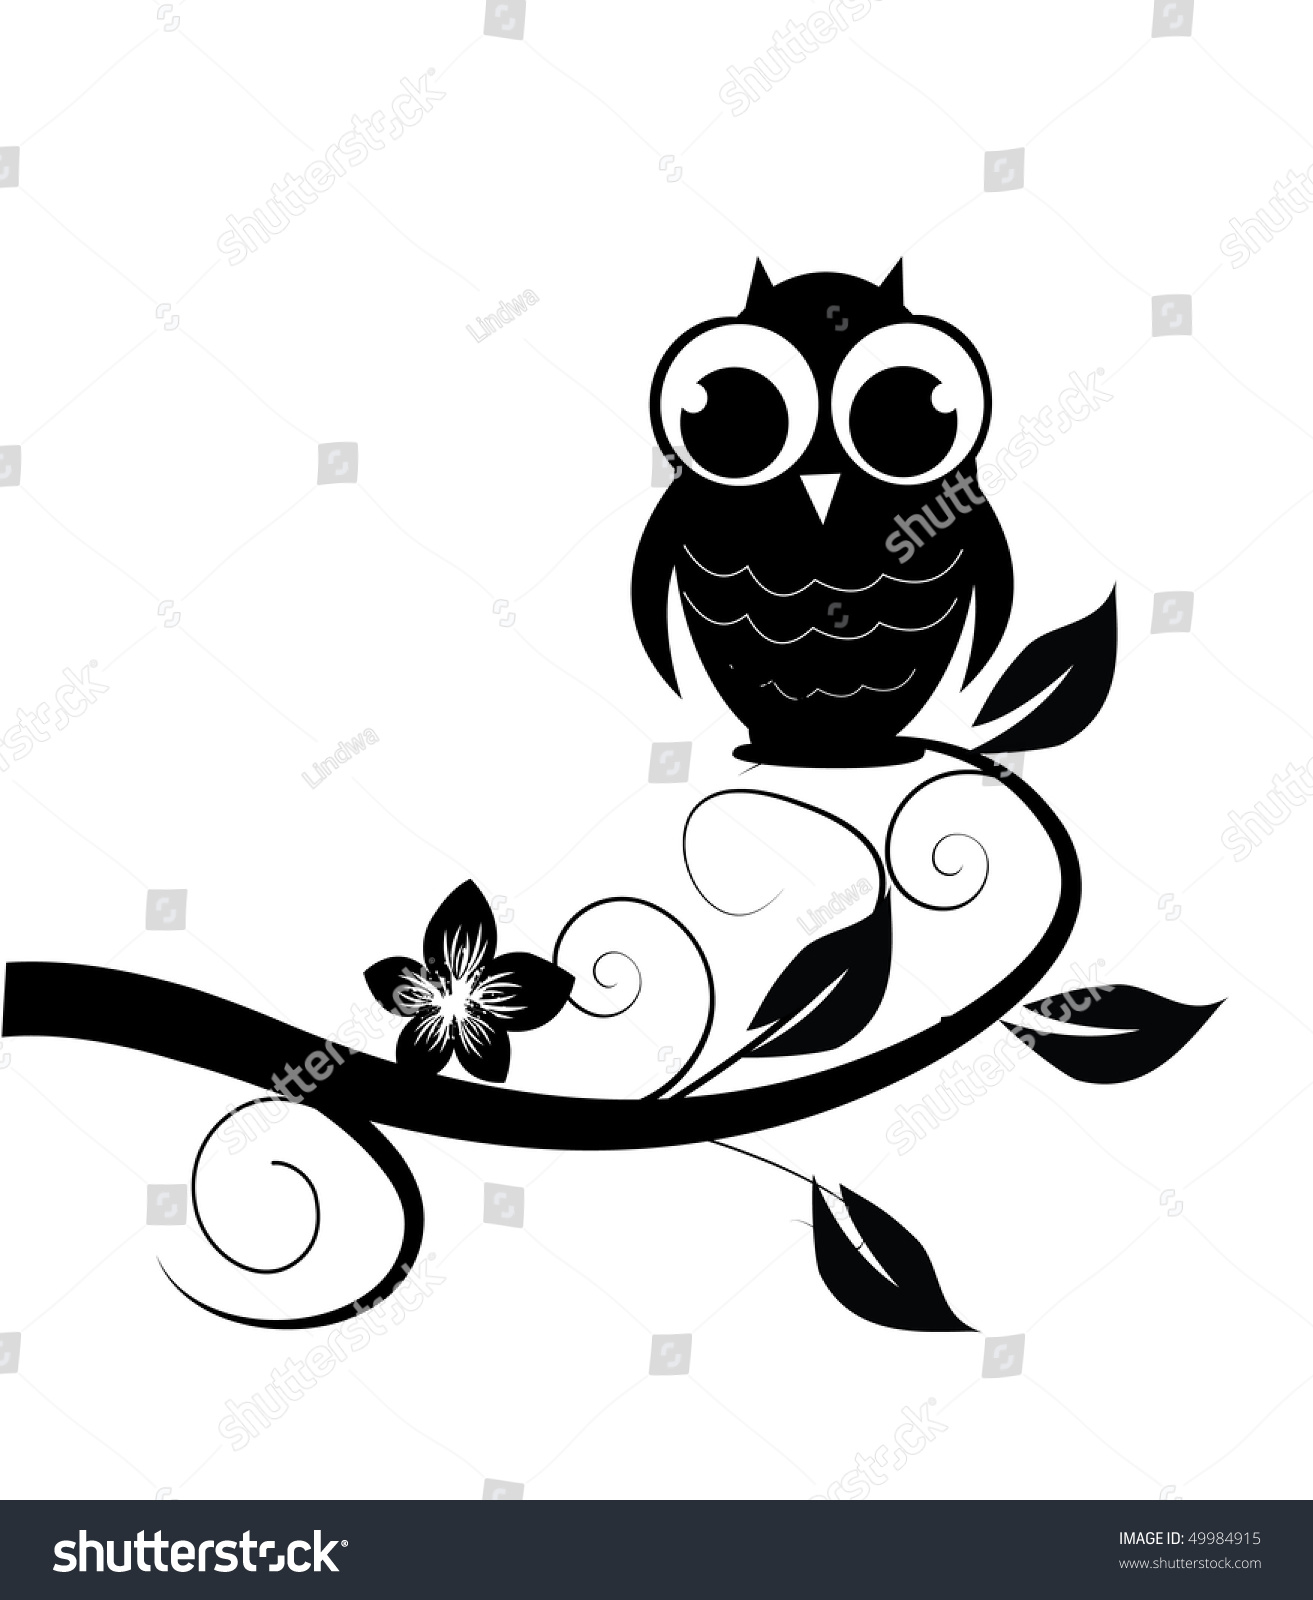 Vector Illustration Black Cartoon Owl Silhouette Stock ...